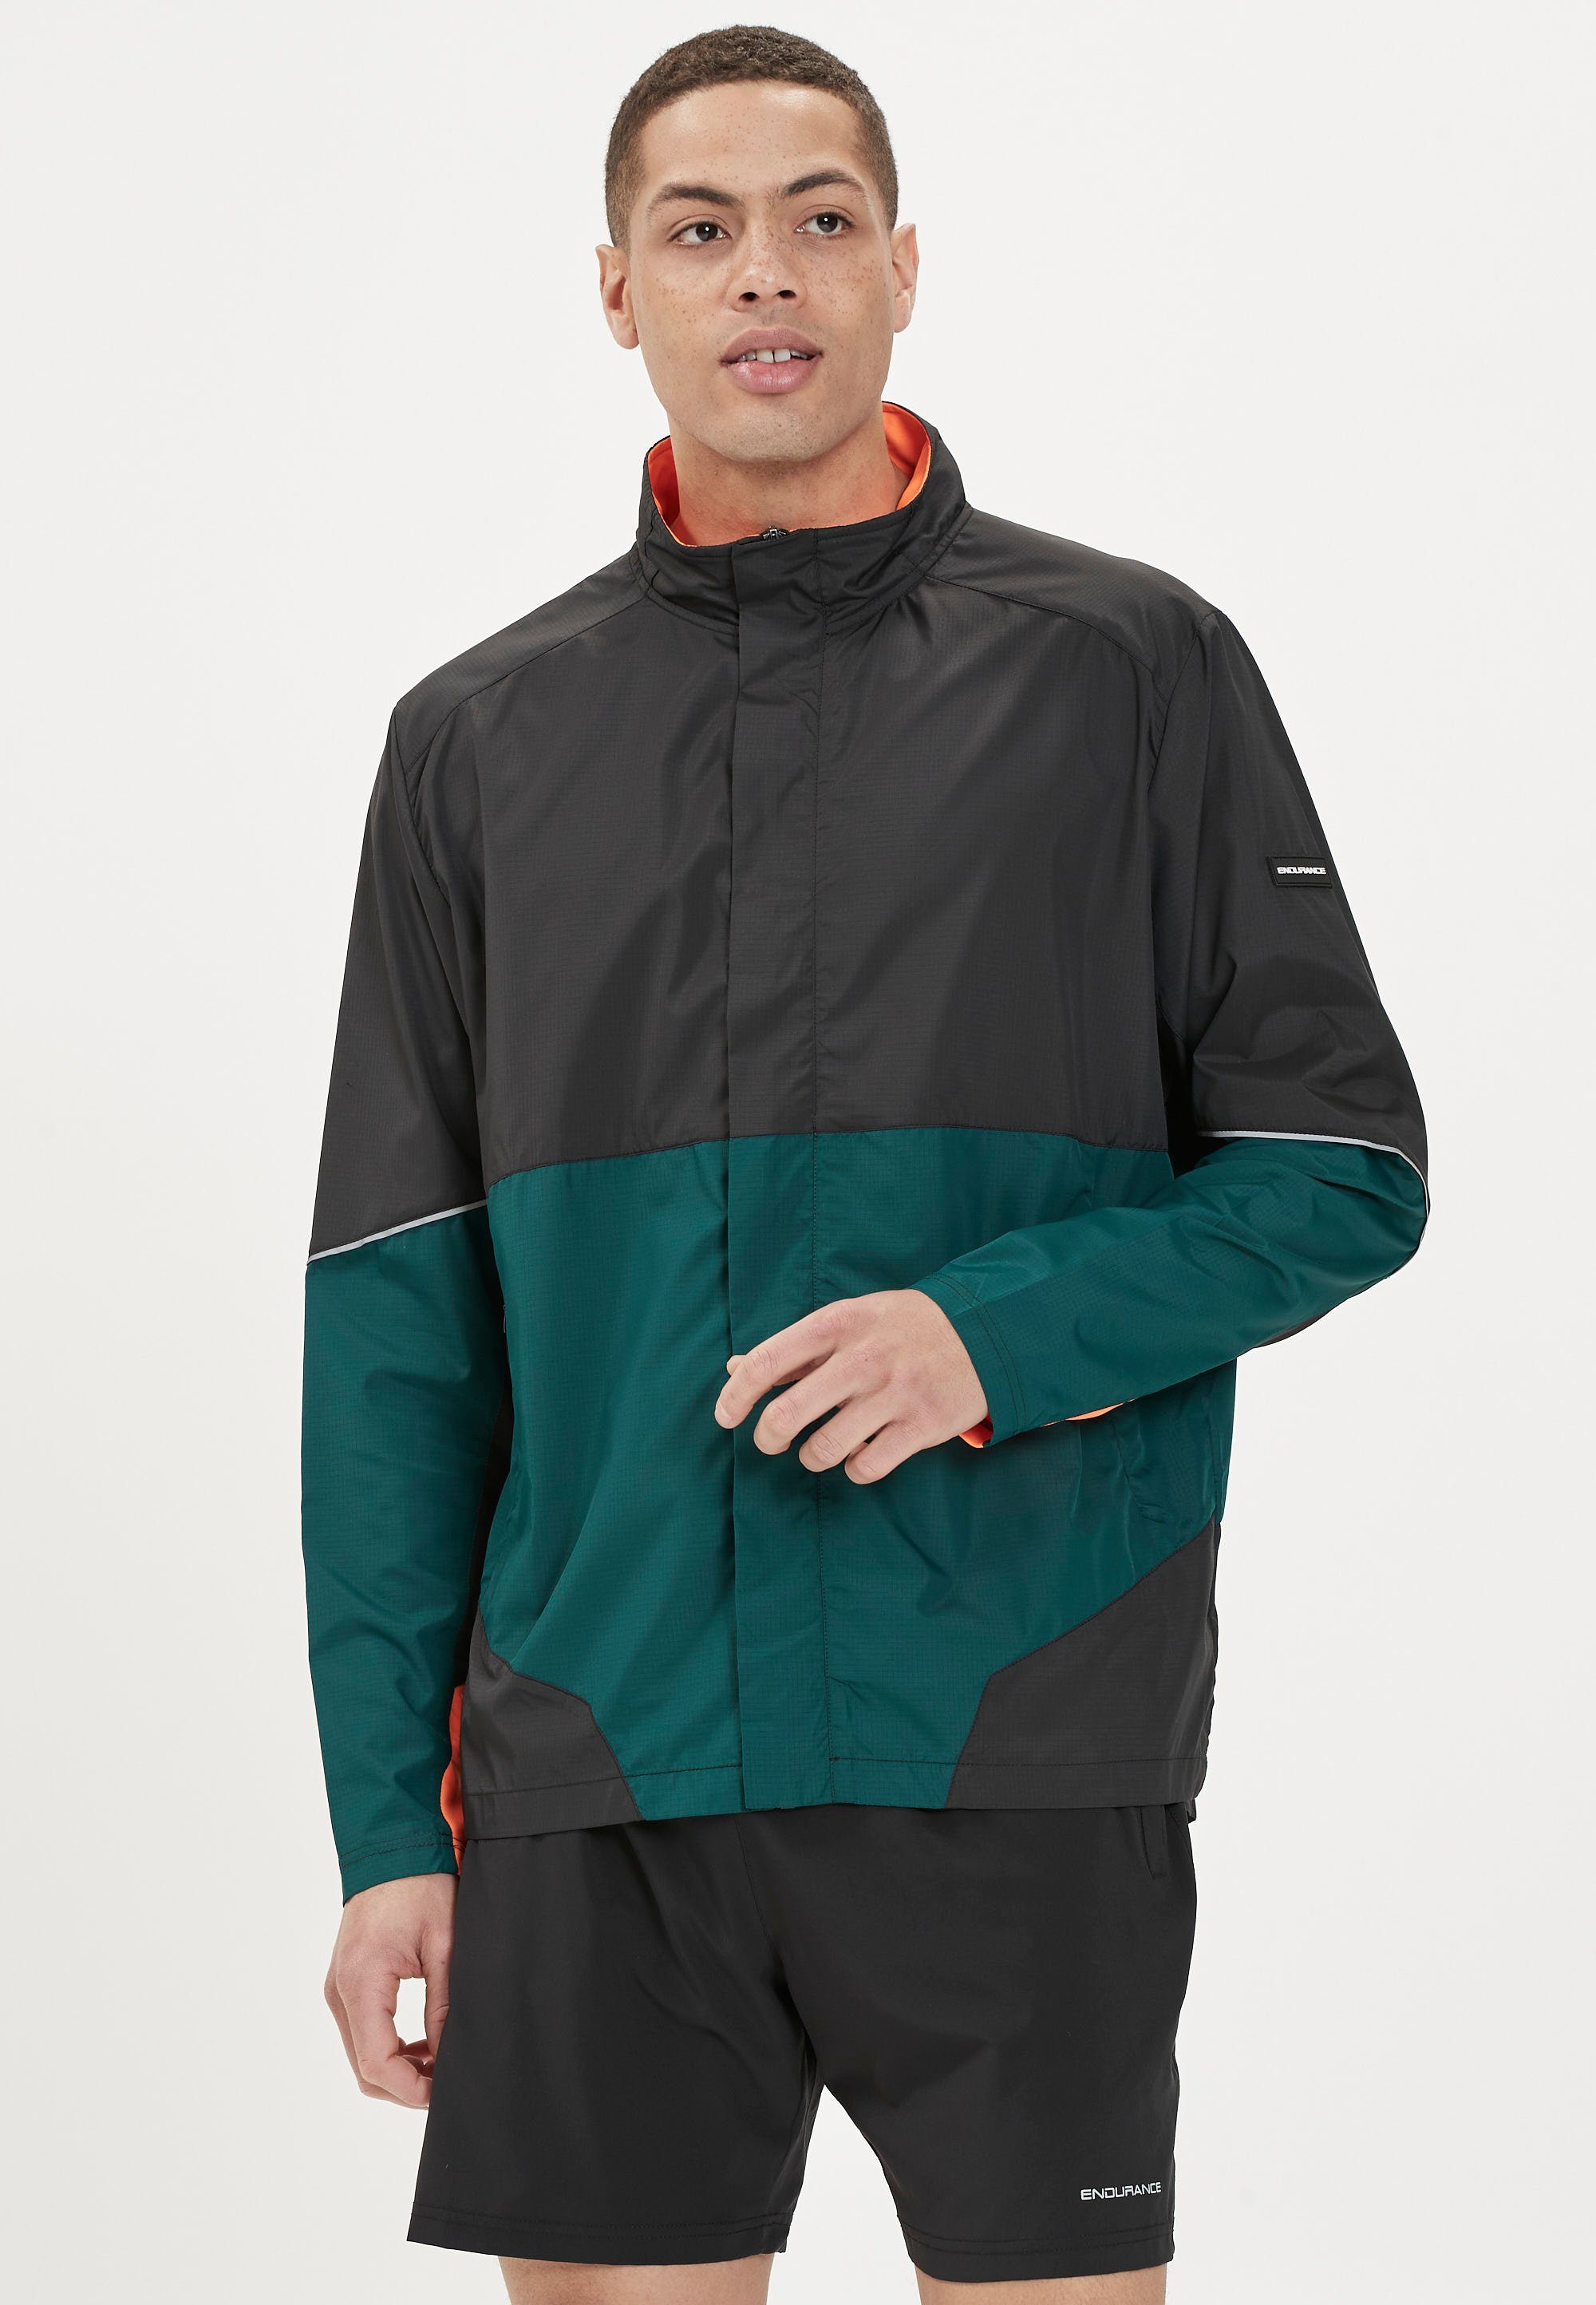 ENDURANCE Laufjacke NOVANT M Functional Jacket mit reflektierenden Details dunkelgrün